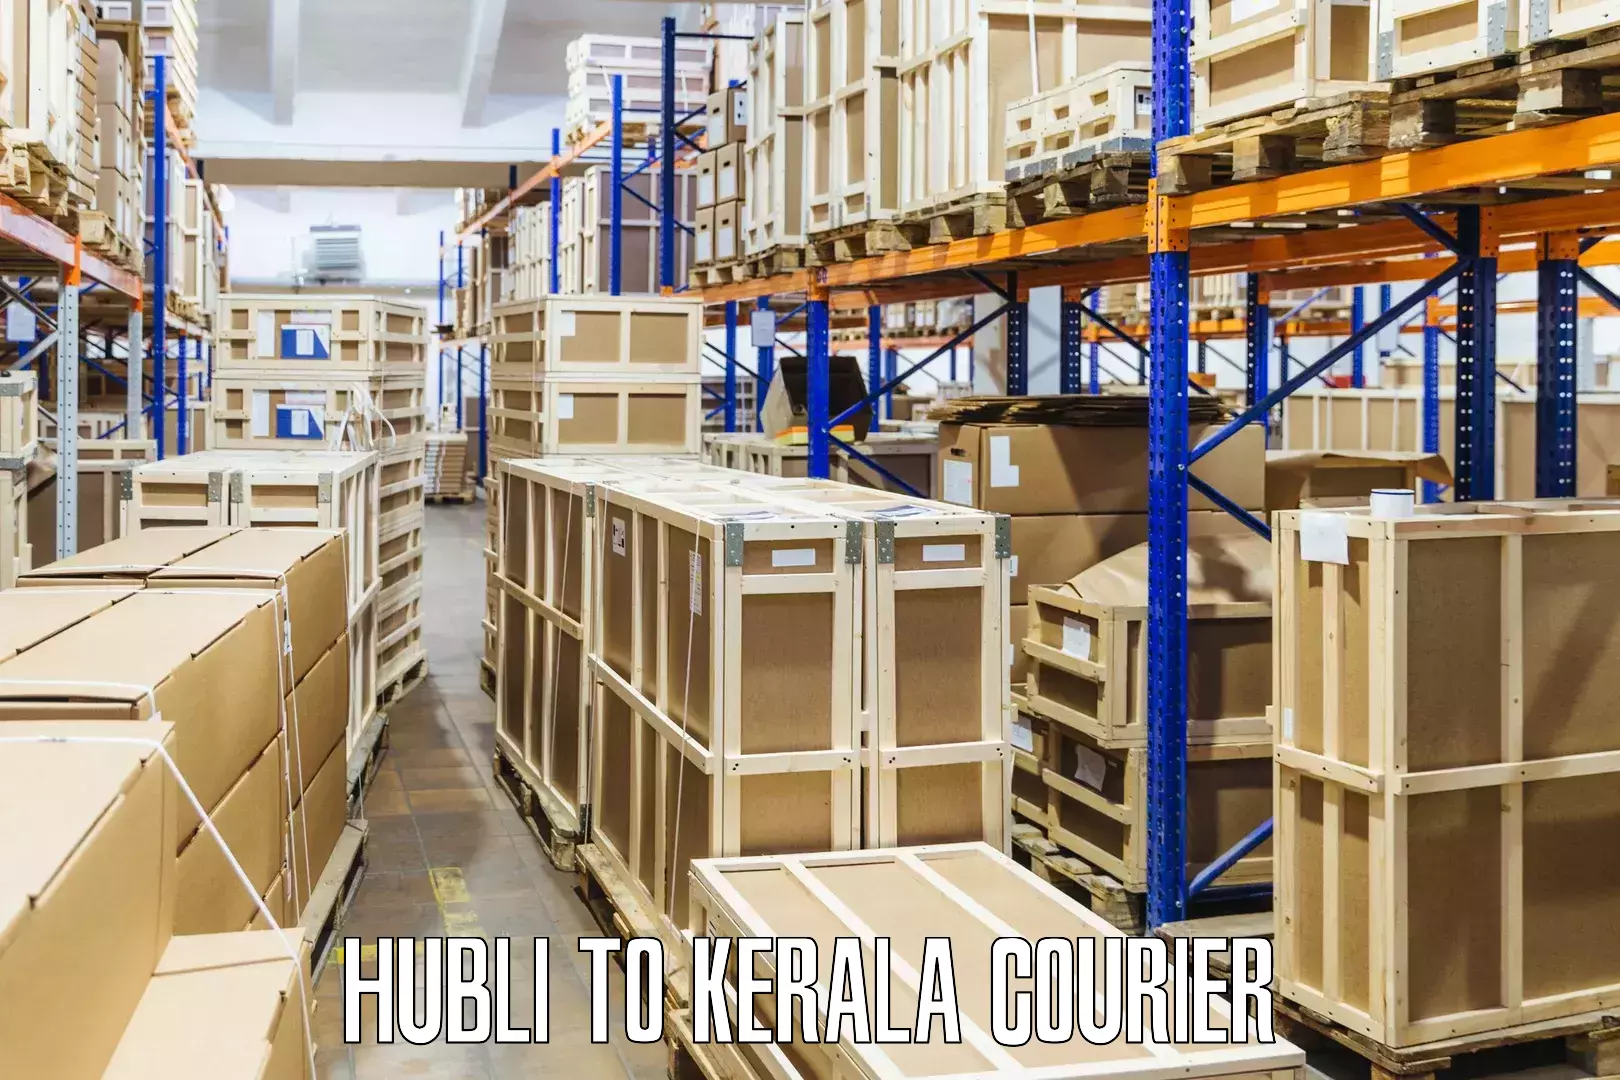 Advanced delivery network Hubli to Kerala